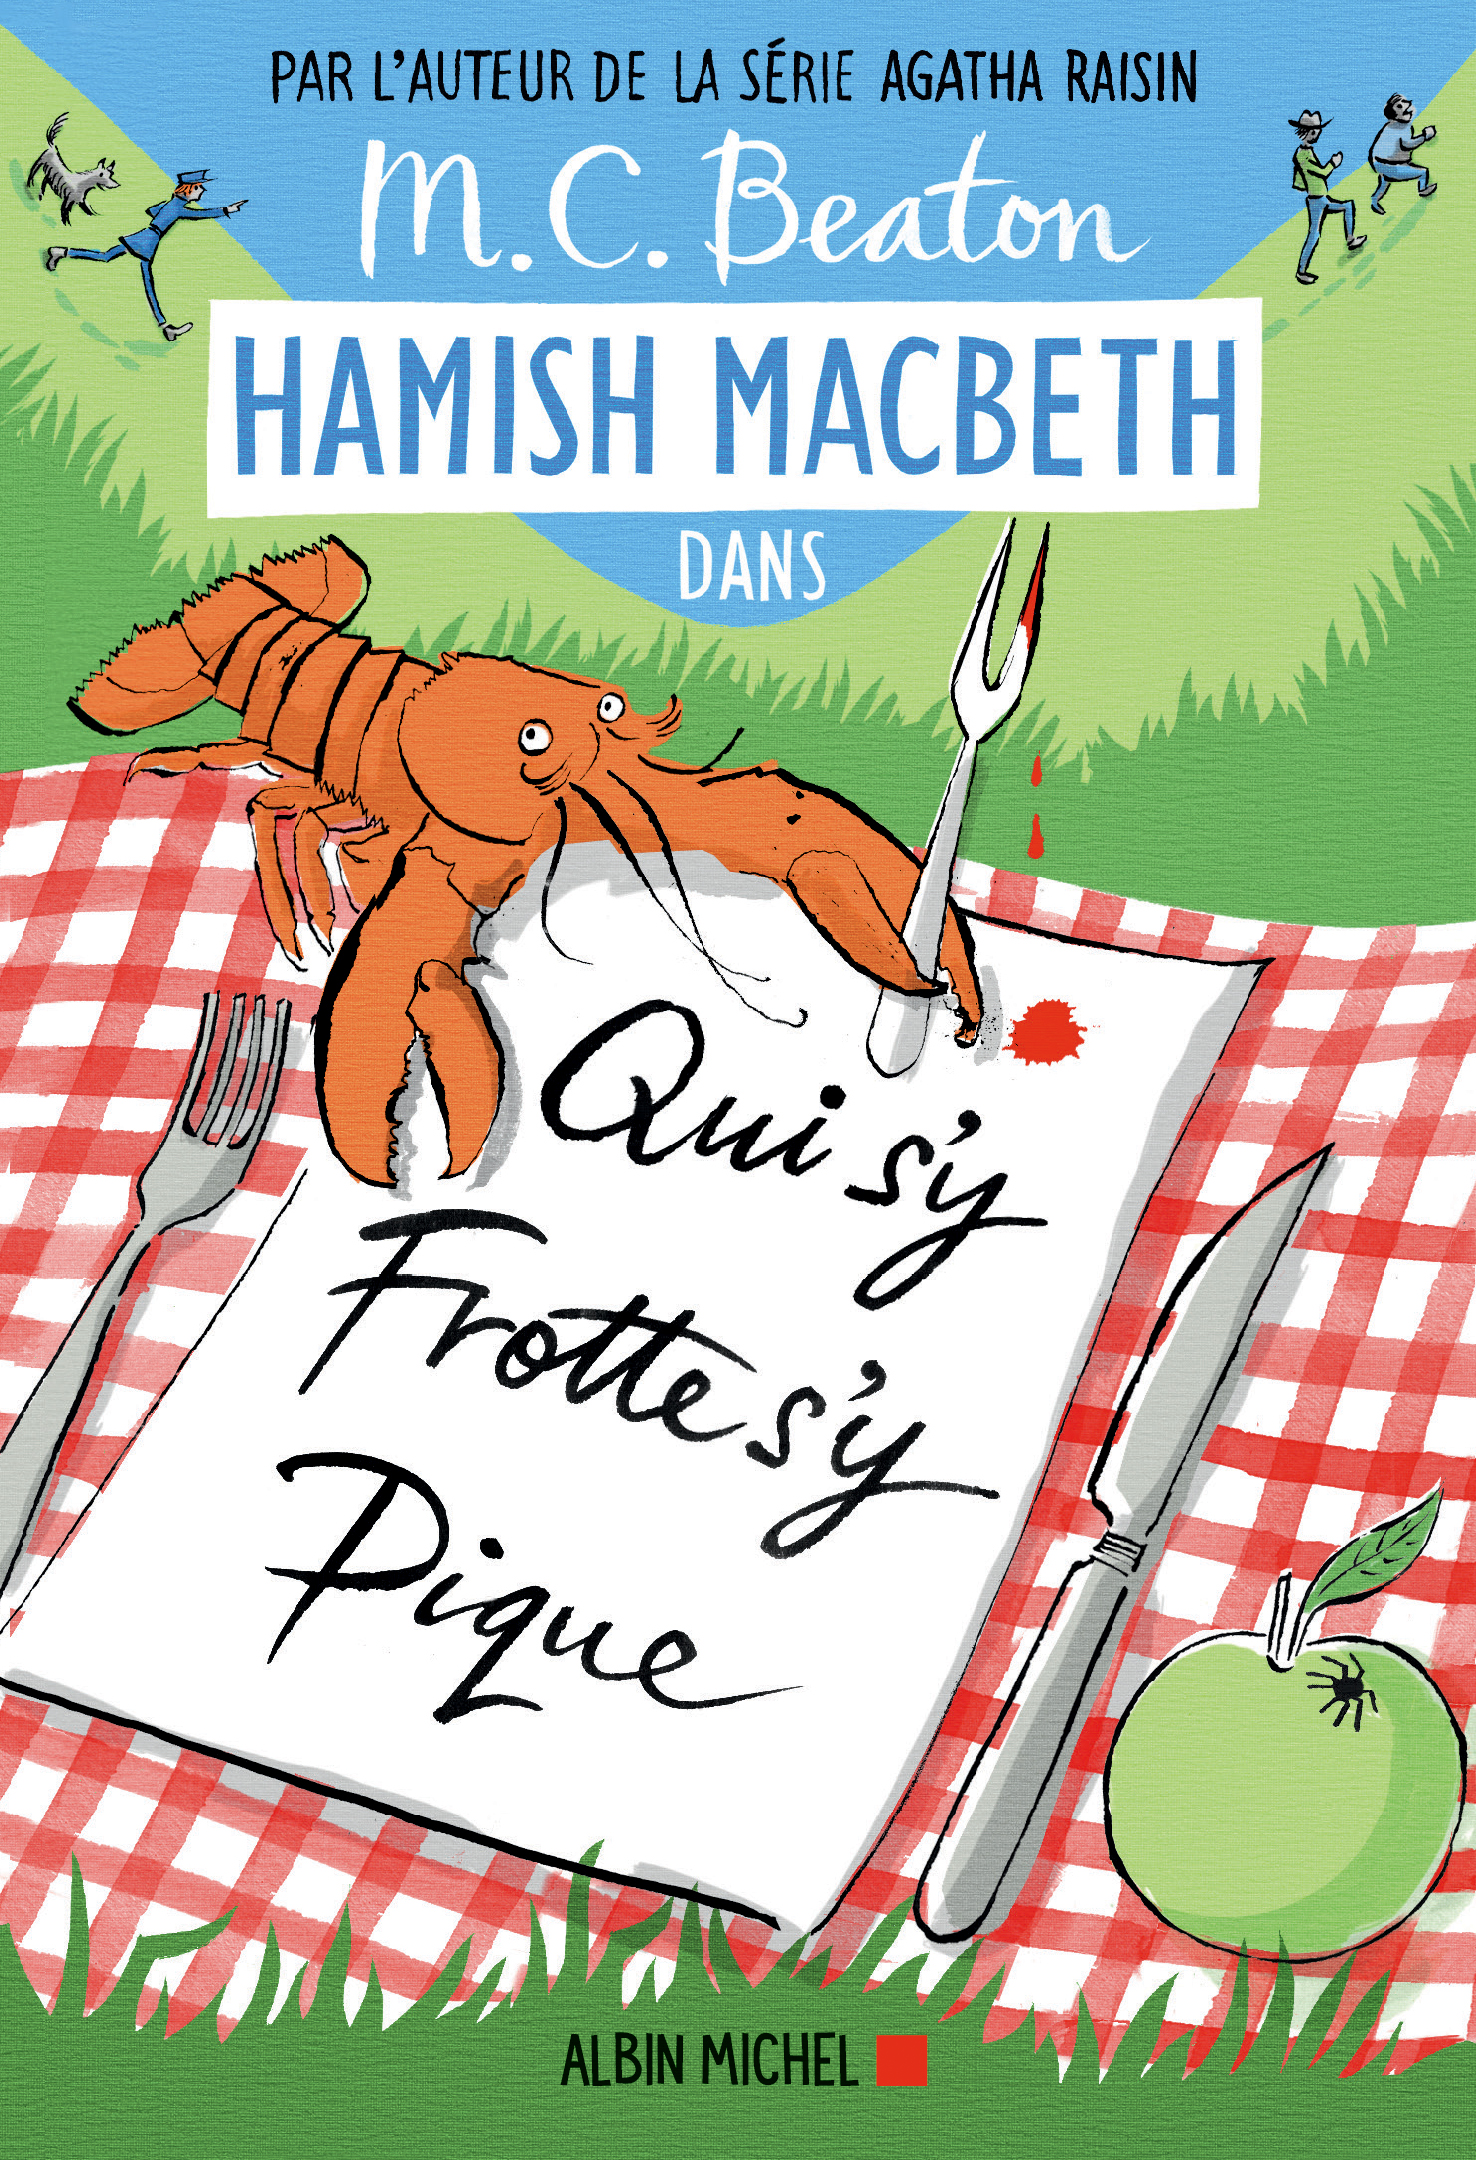 Couverture du livre Hamish Macbeth 3 - Qui s'y frotte s'y pique